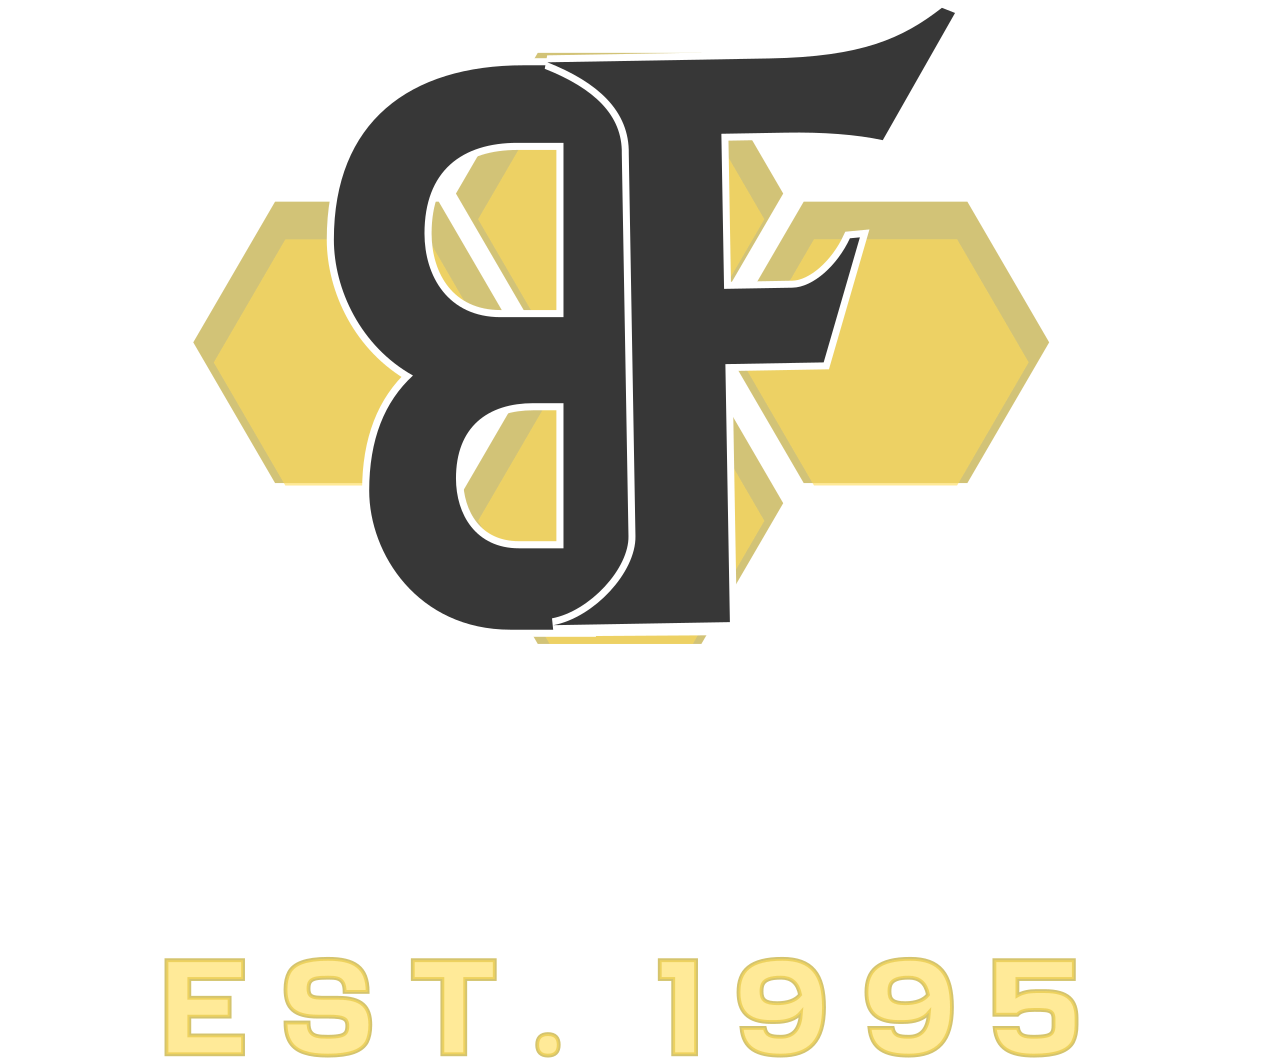 BEALINE FARM's logo